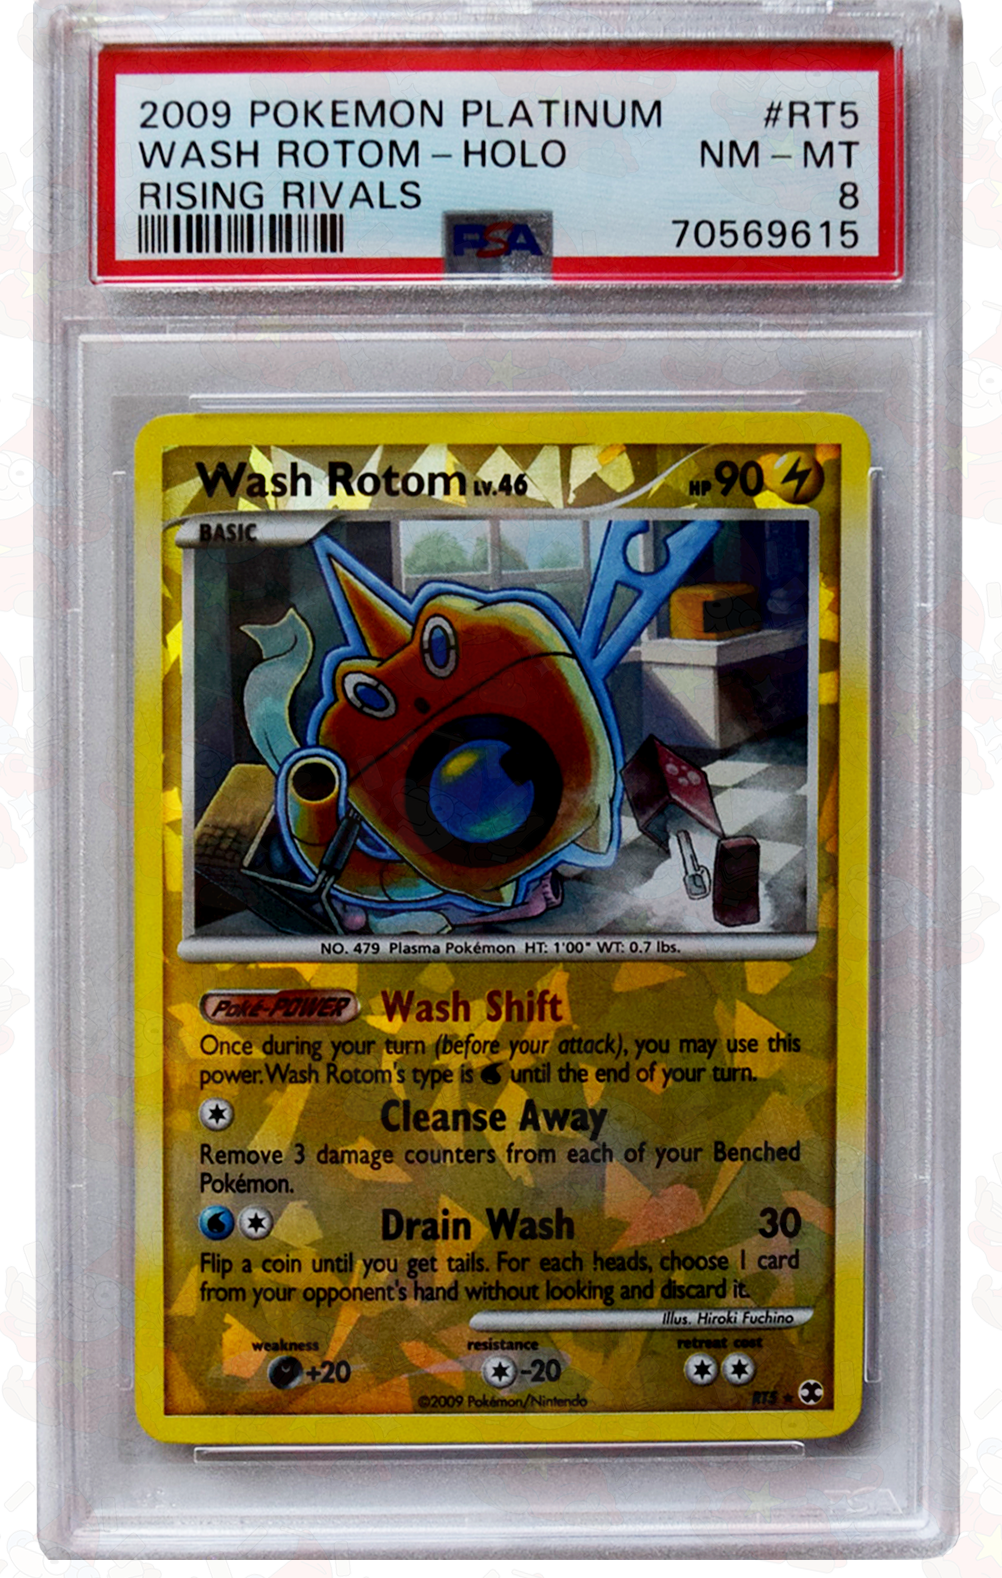 2009 Pokemon Platinum - Wash Rotom (#RT5) - Holo - Rising Rivals - PSA 8 NM - MT